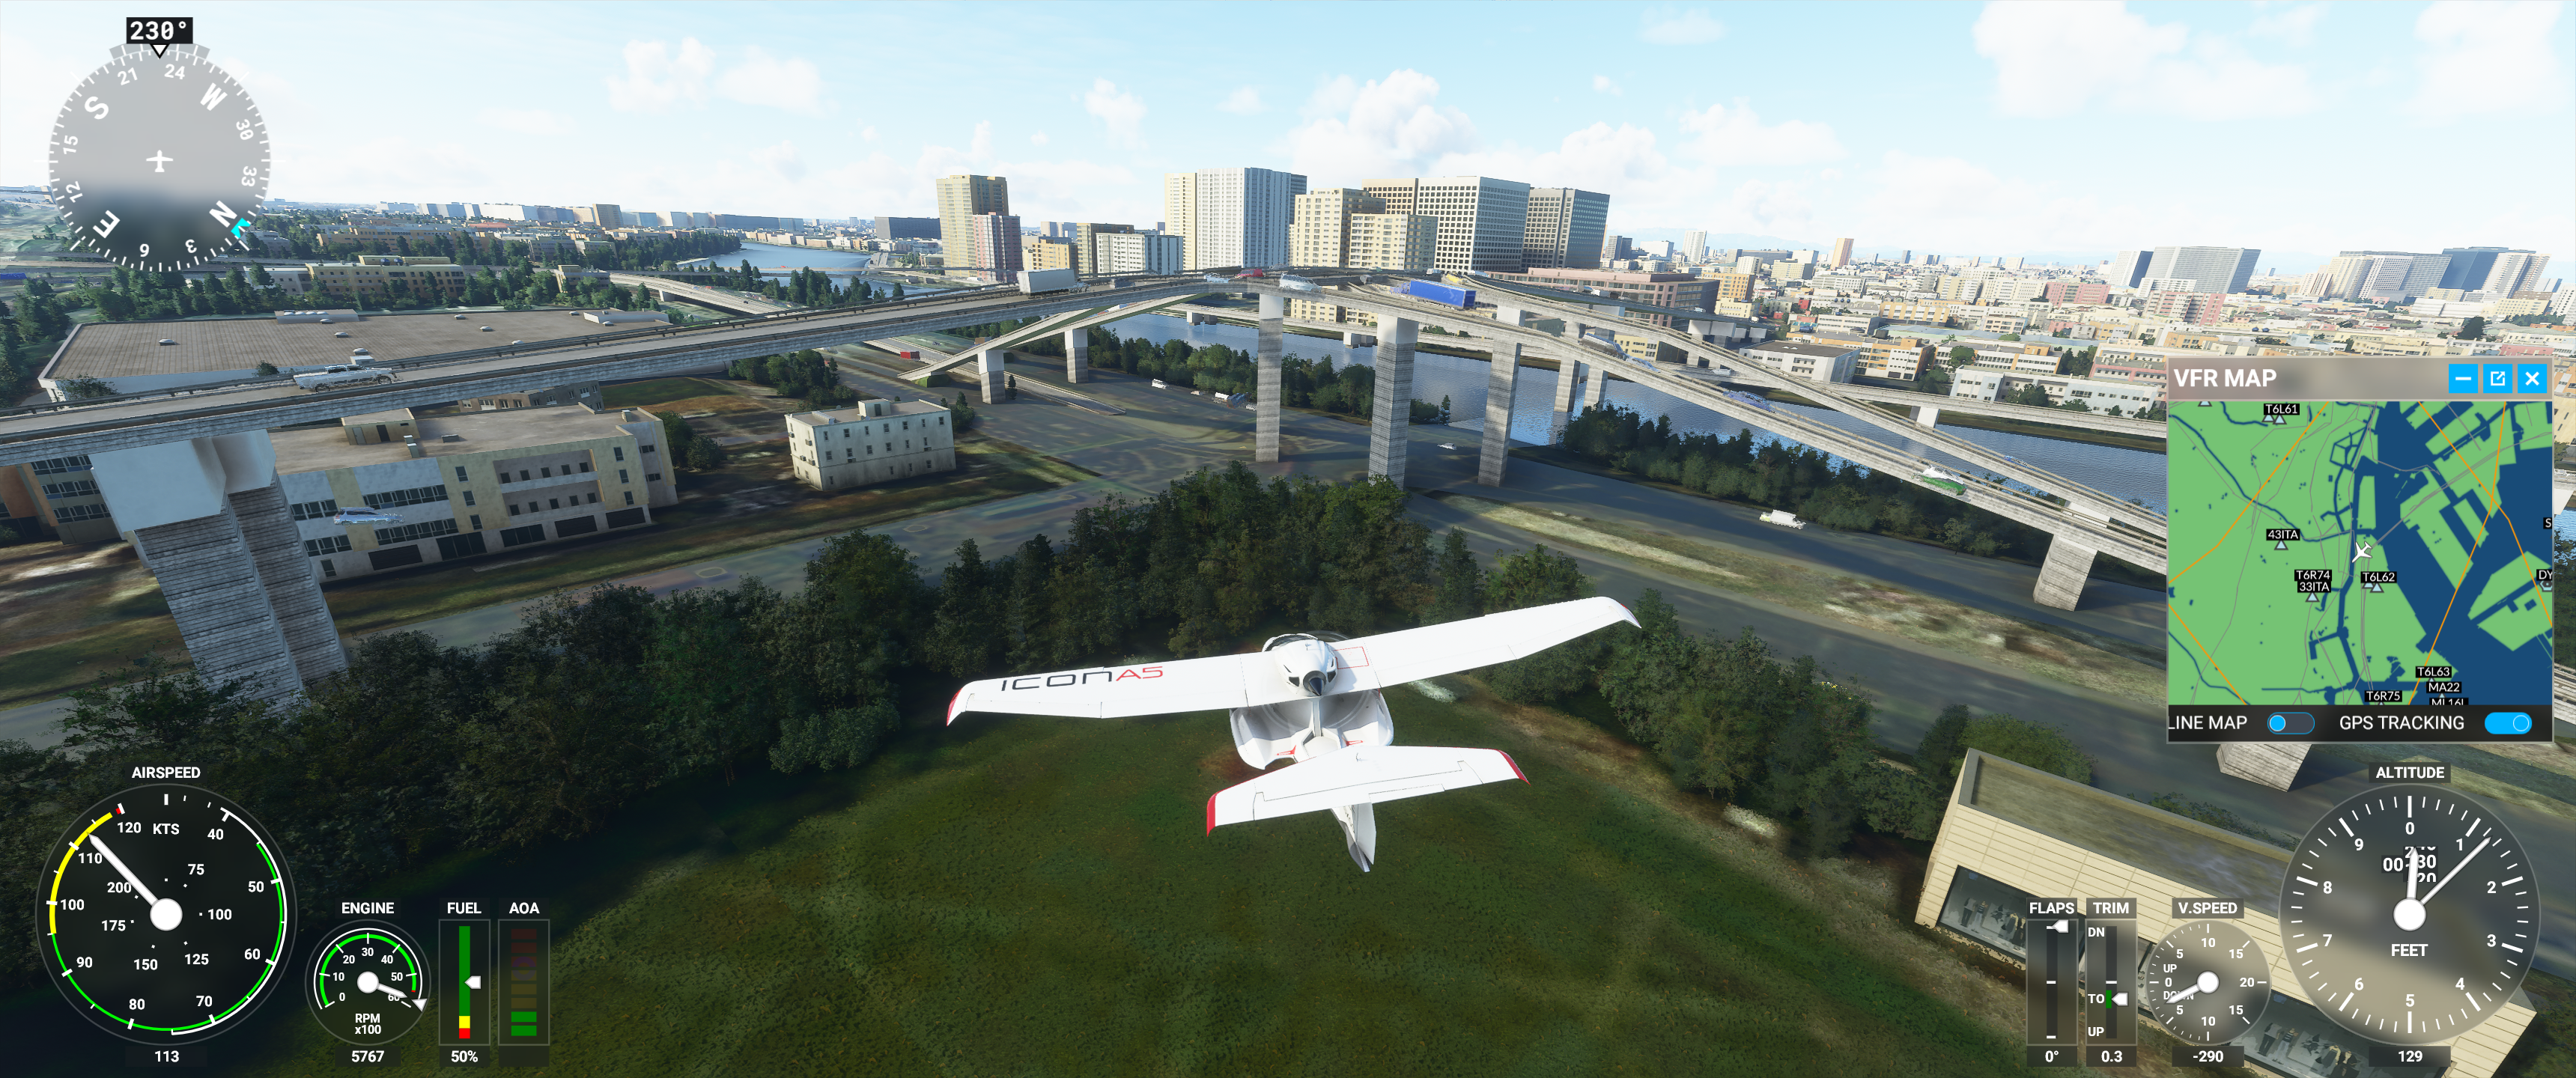 Microsoft Flight Simulator Screenshot 2020.10.02 - 20.43.31.31.png